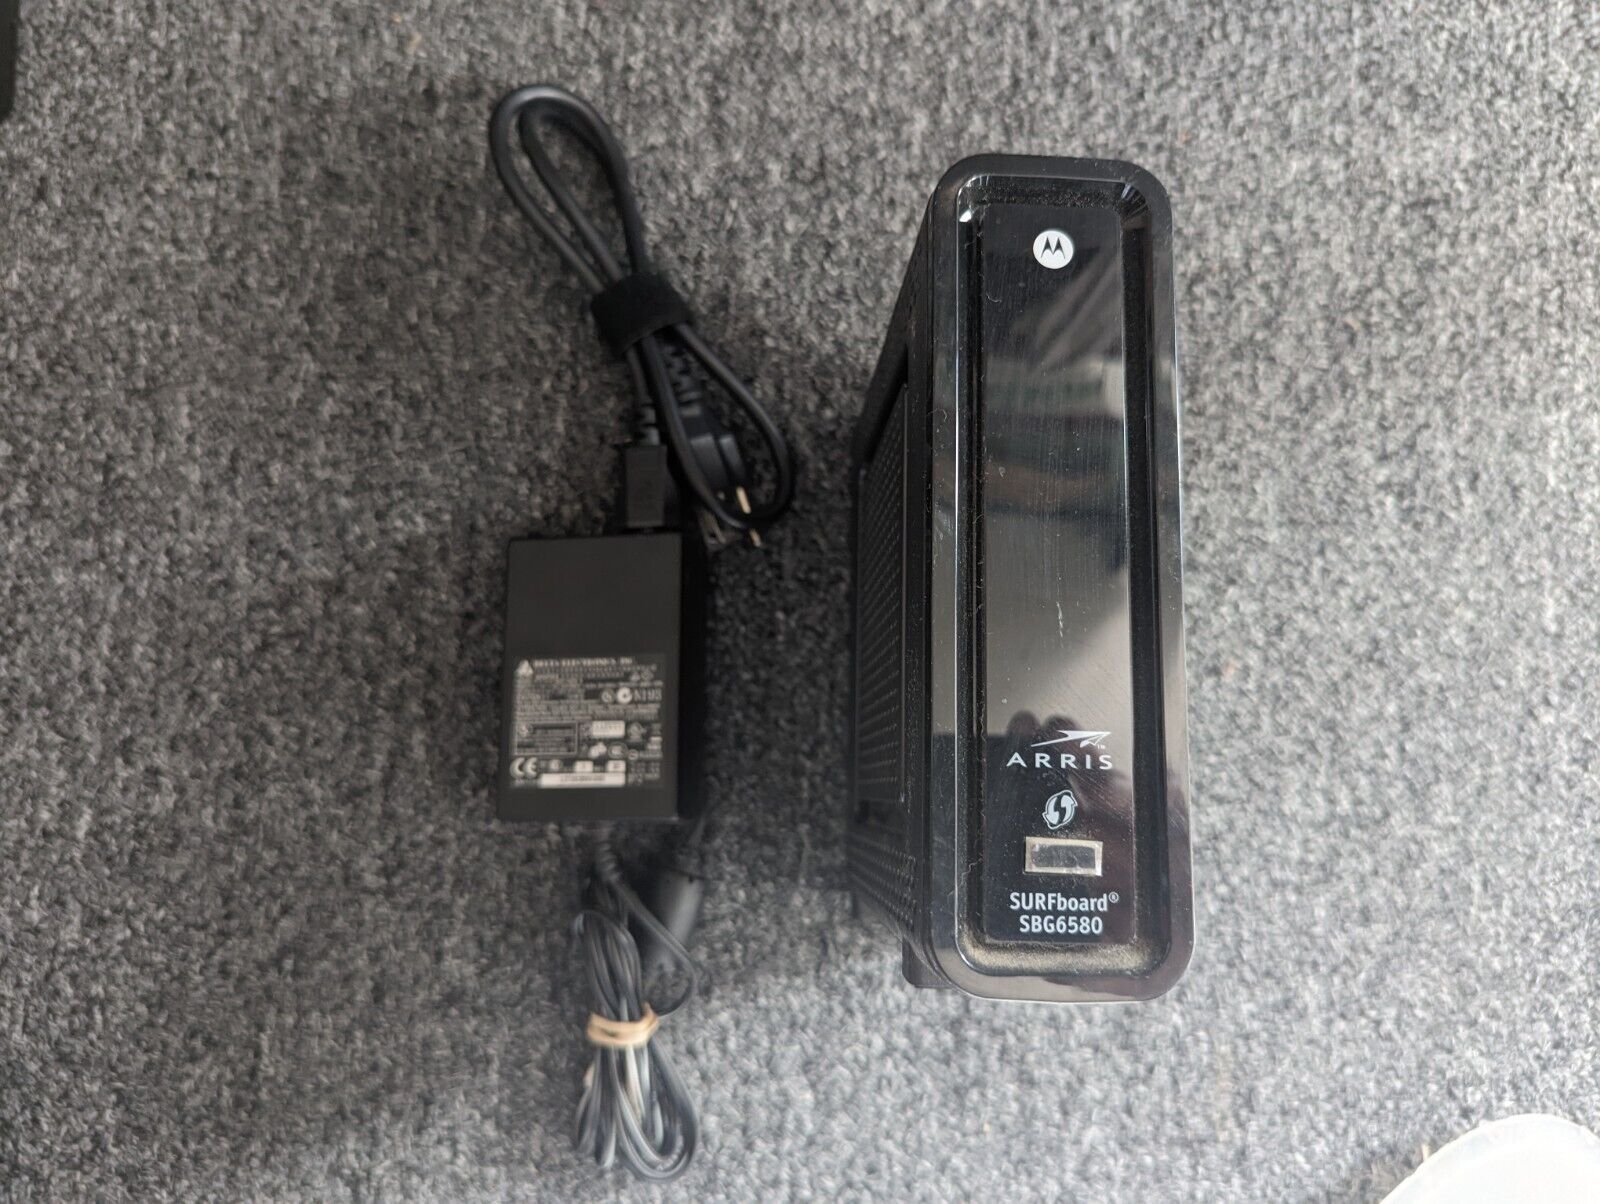 Motorola Arris Surfboard SBG6580 DOCSIS 3.0 Cable ModemWiFi Router.   